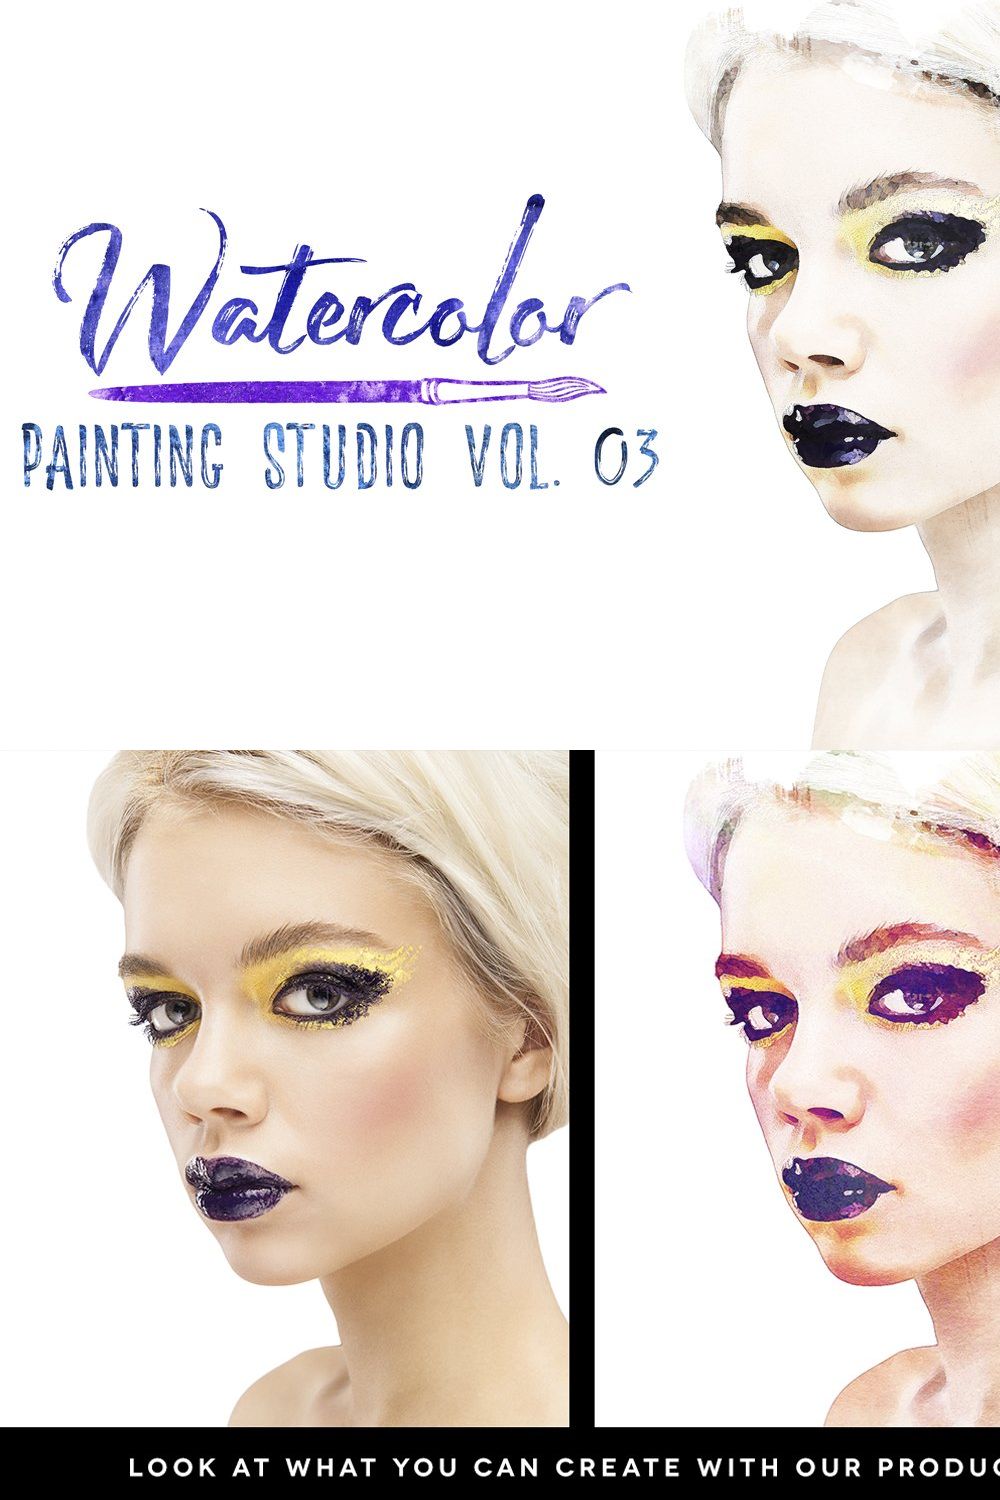 Watercolor Painting Studio Vol. 03 pinterest preview image.